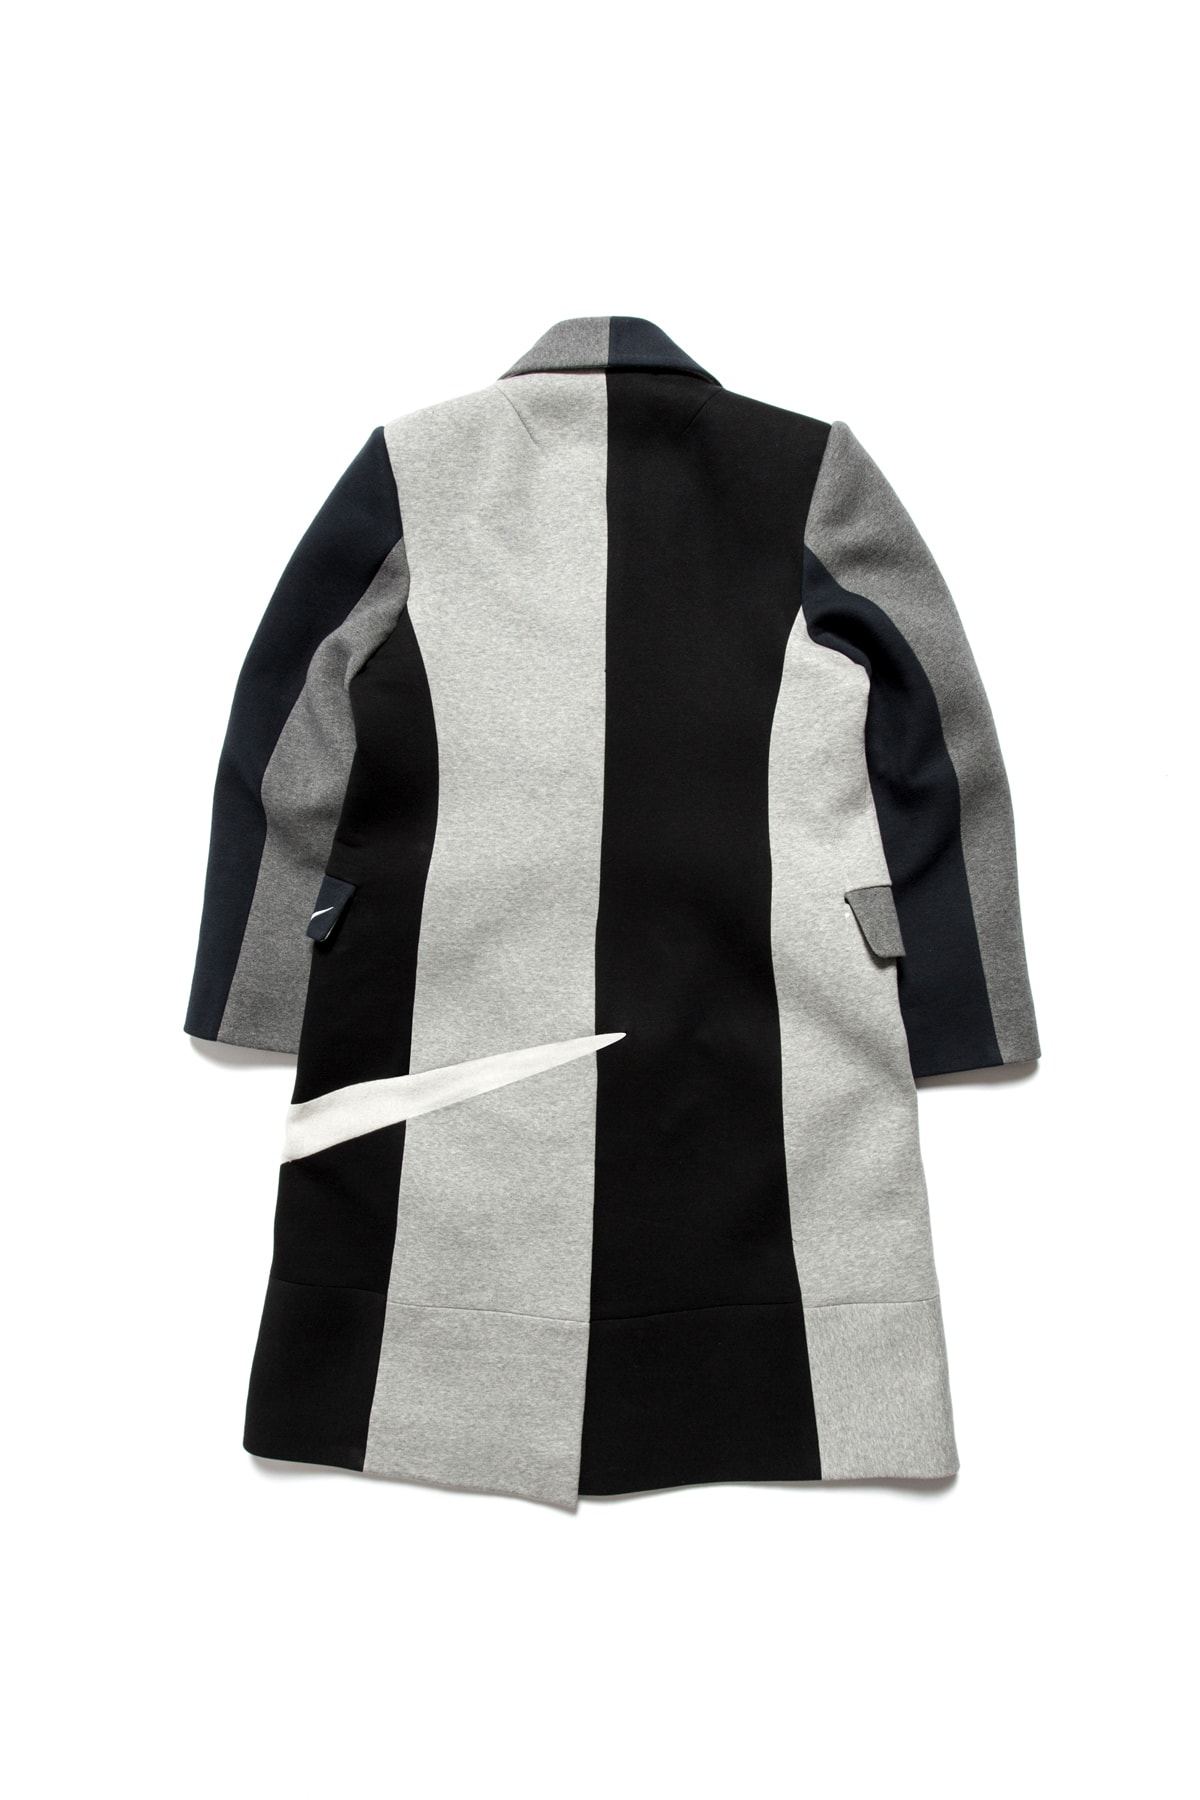 clothsurgeon nike patchwork coat vest remake england london rebuild spring 2018 swoosh reflective sweatpants fleece pocket 3M